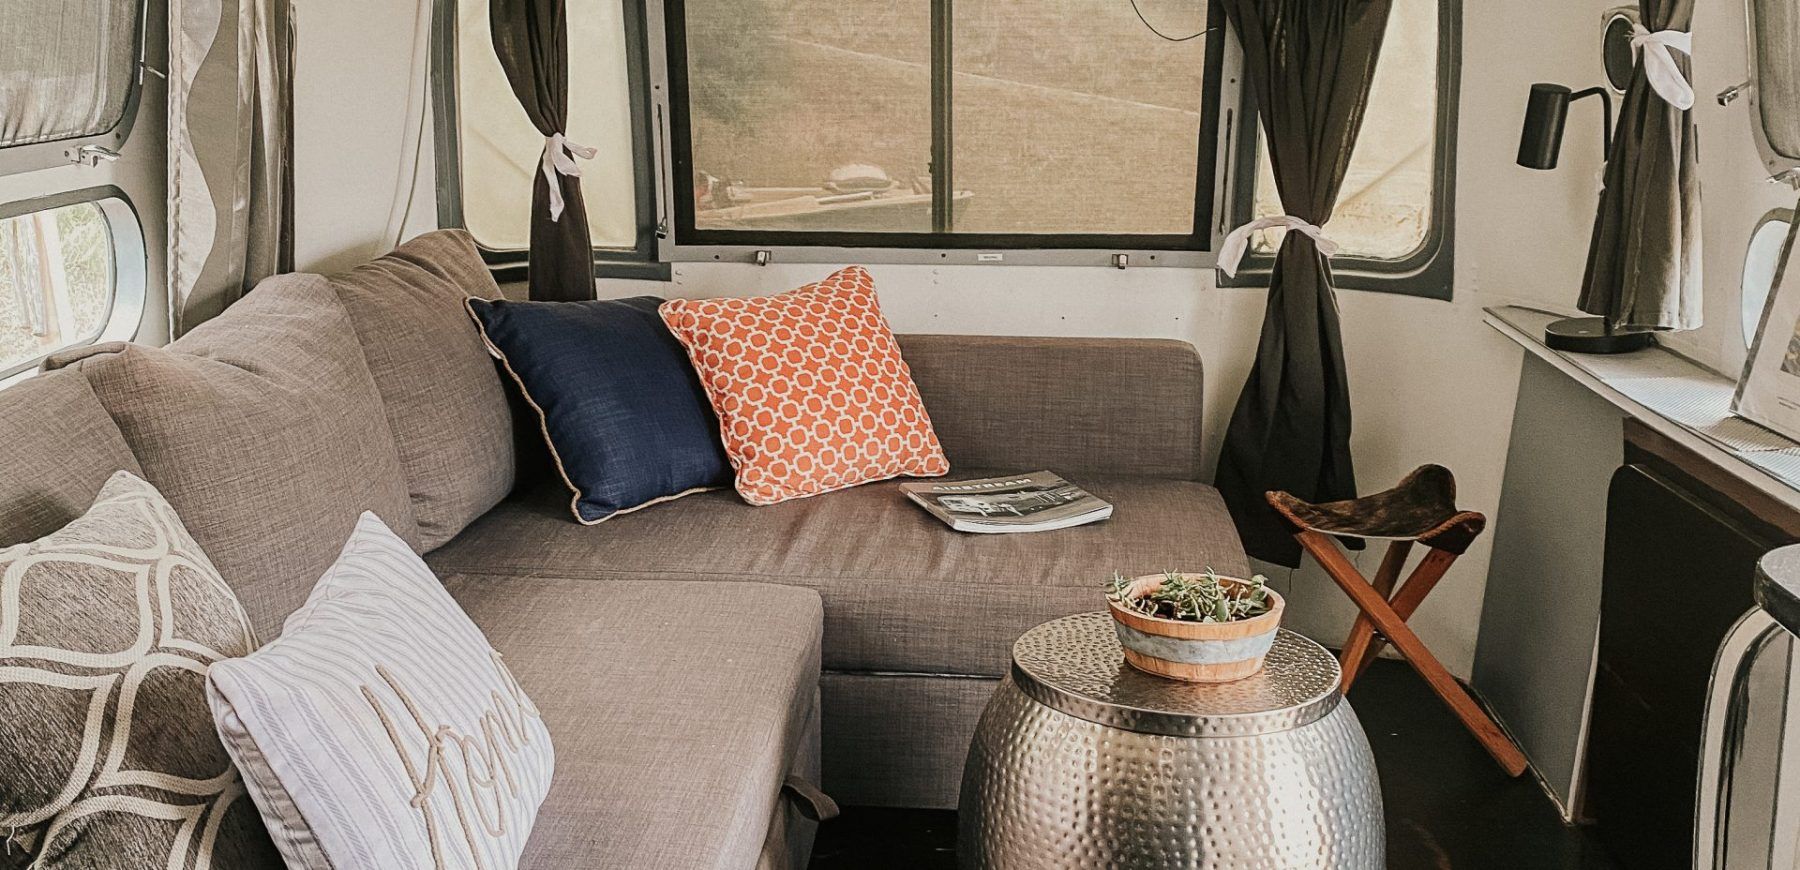 Airstream Living Room